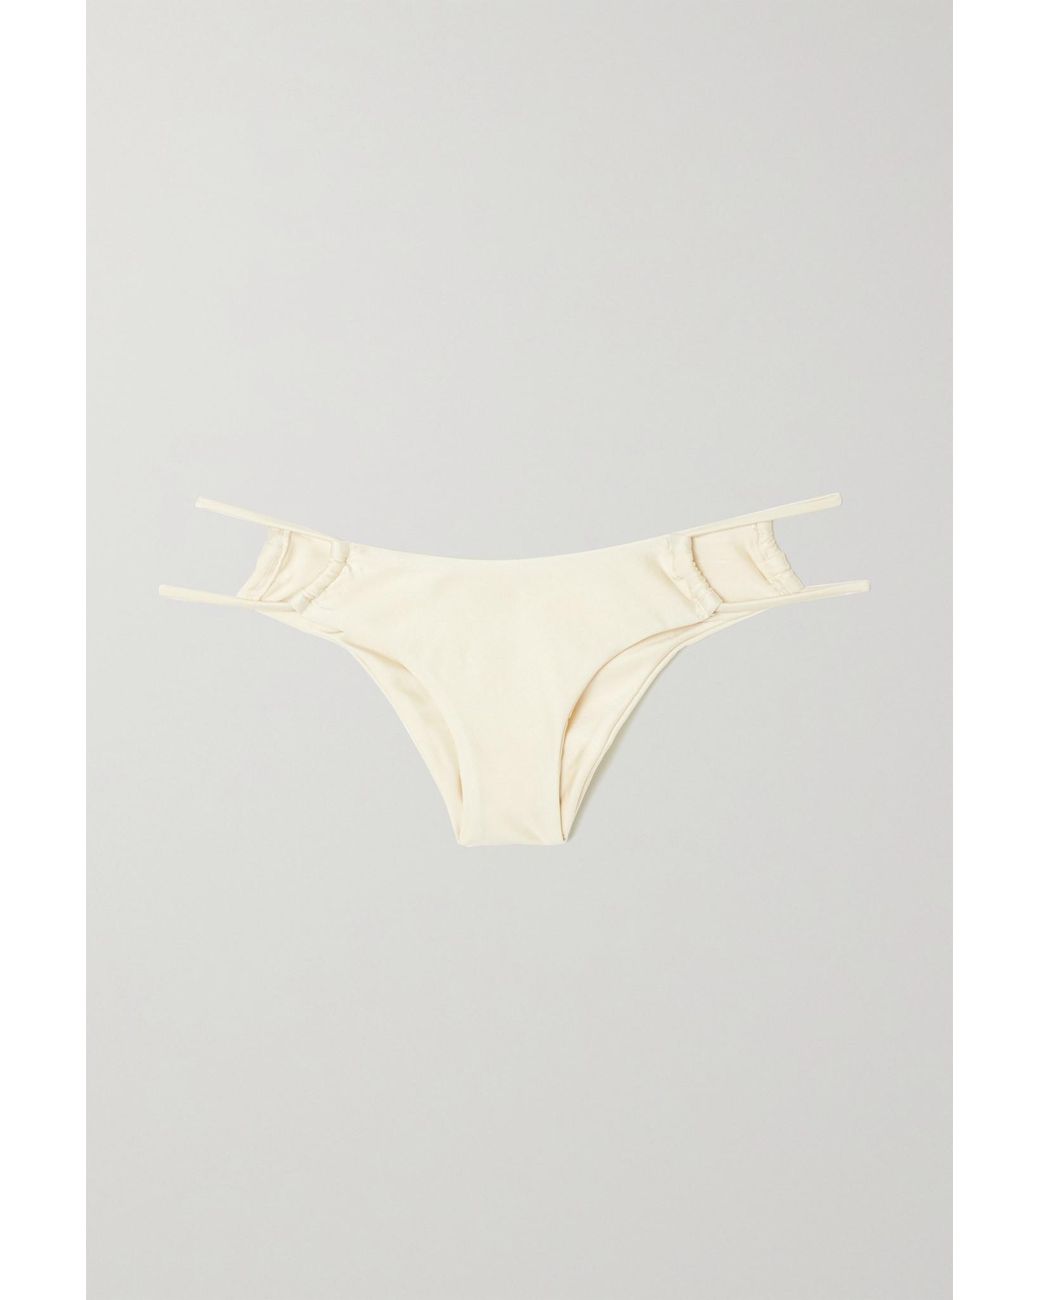 Cult Gaia Synthetic Myra Cutout Bikini Briefs in White - Lyst